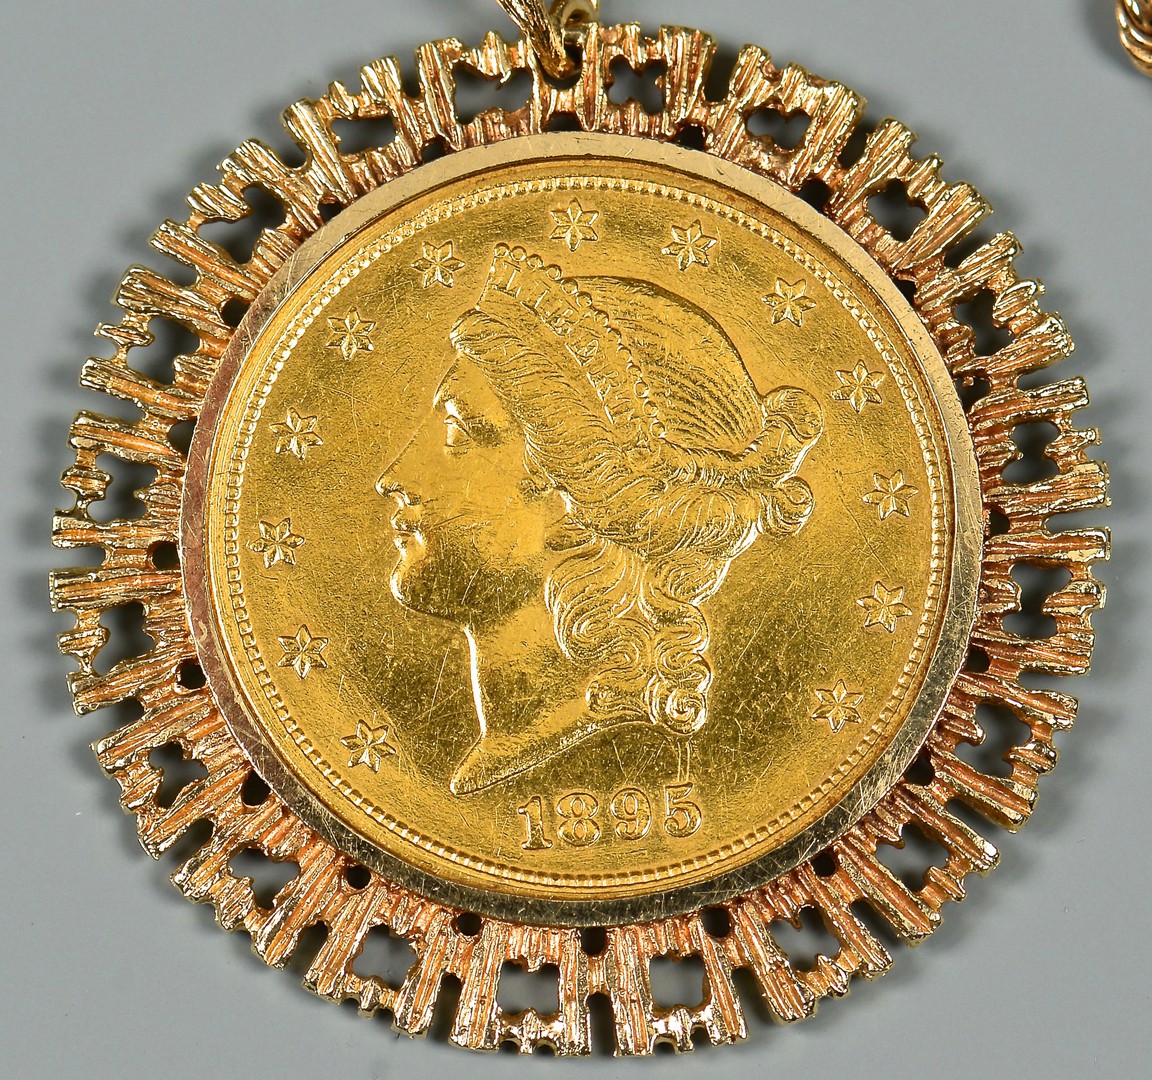 Lot 348: 1895 $20 Coin Pendant Necklace